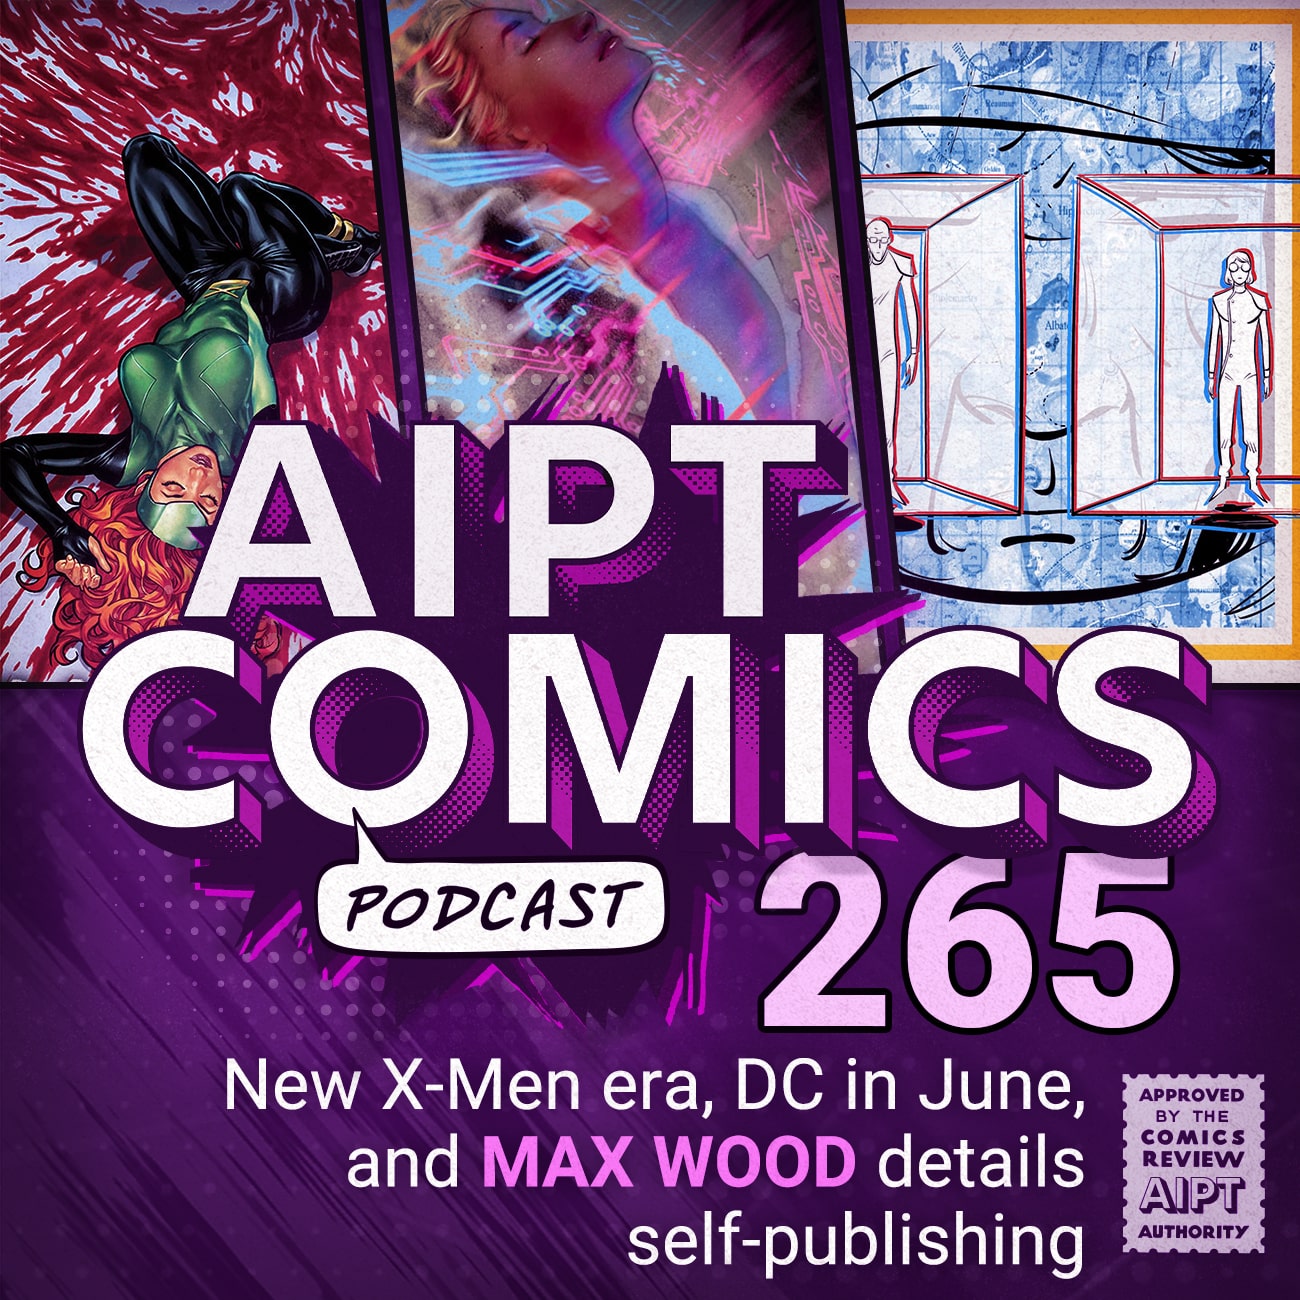 AIPT Comics Podcast Episode 265: New X-Men era, DC in June, and Max Wood details self-publishing